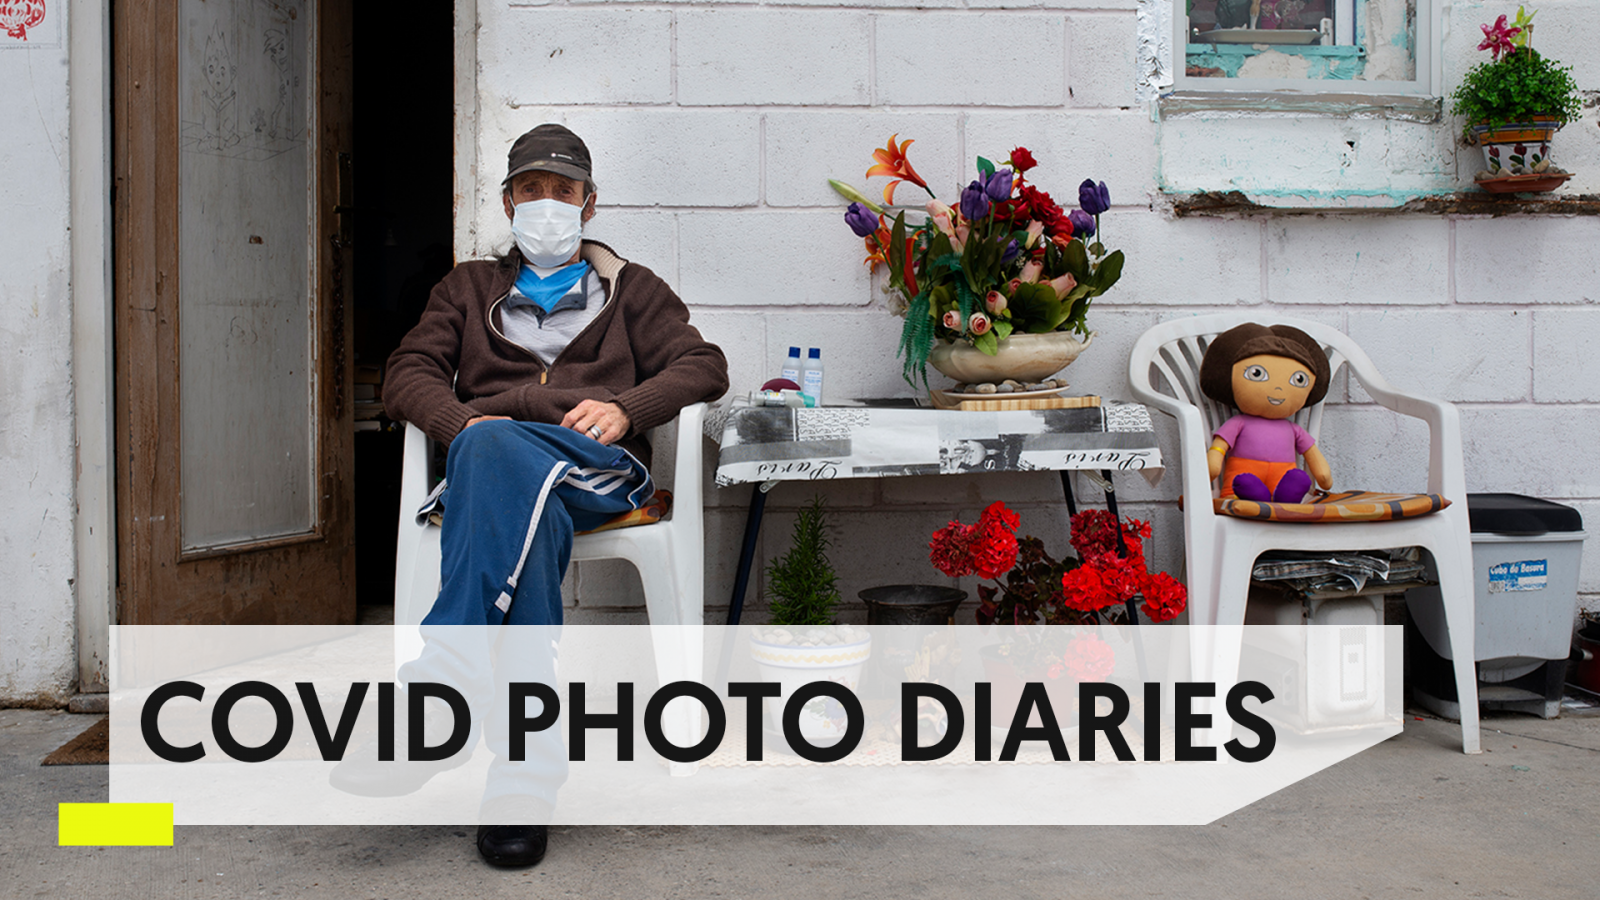 Coronavirus: CovidPhotoDiaries, un diario visual de la pandemia